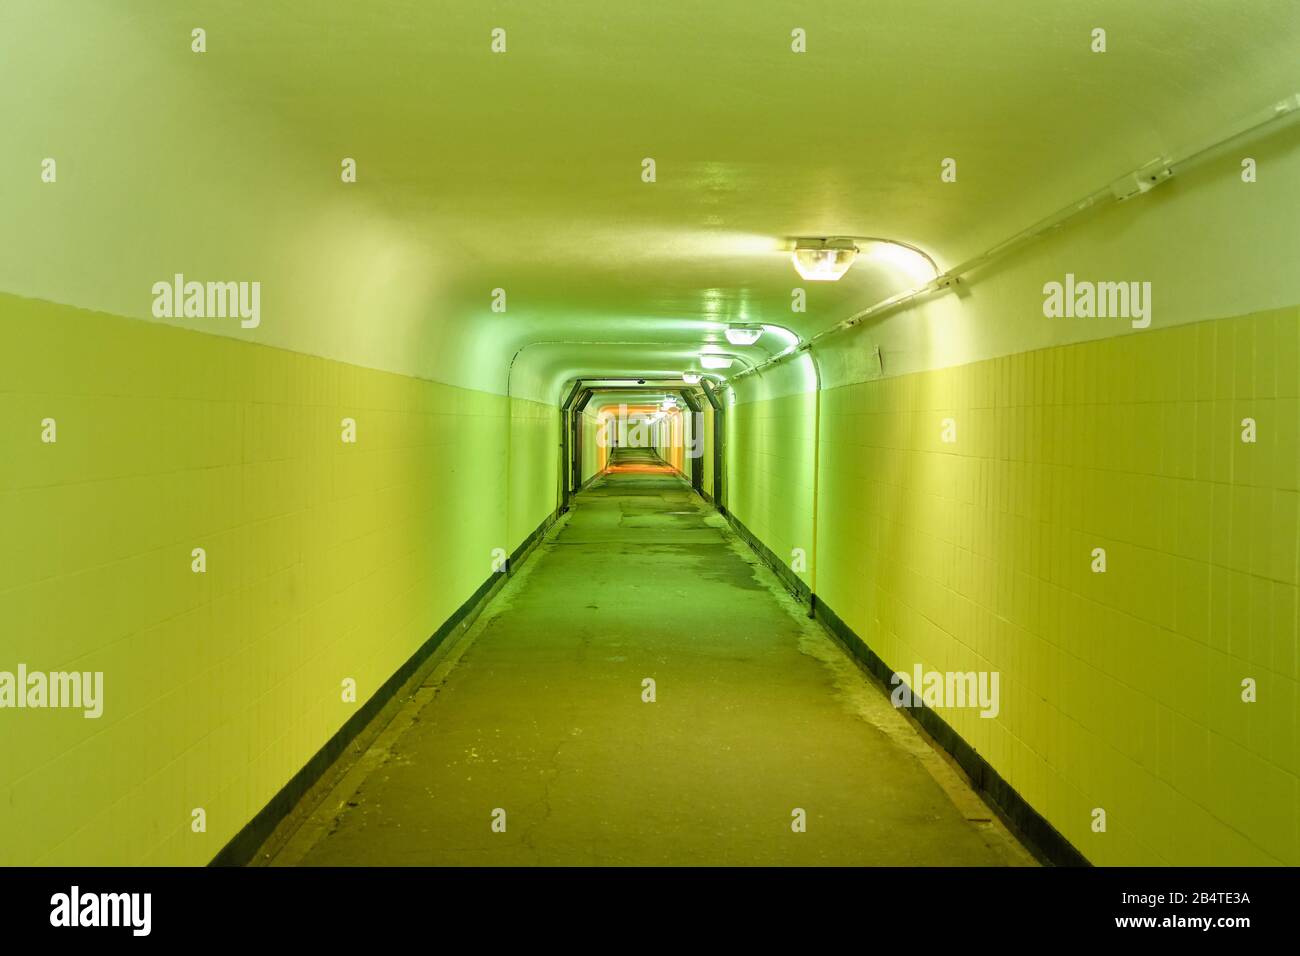 Underground pedestrian tunnel with green walls. Close up. Stock Photo